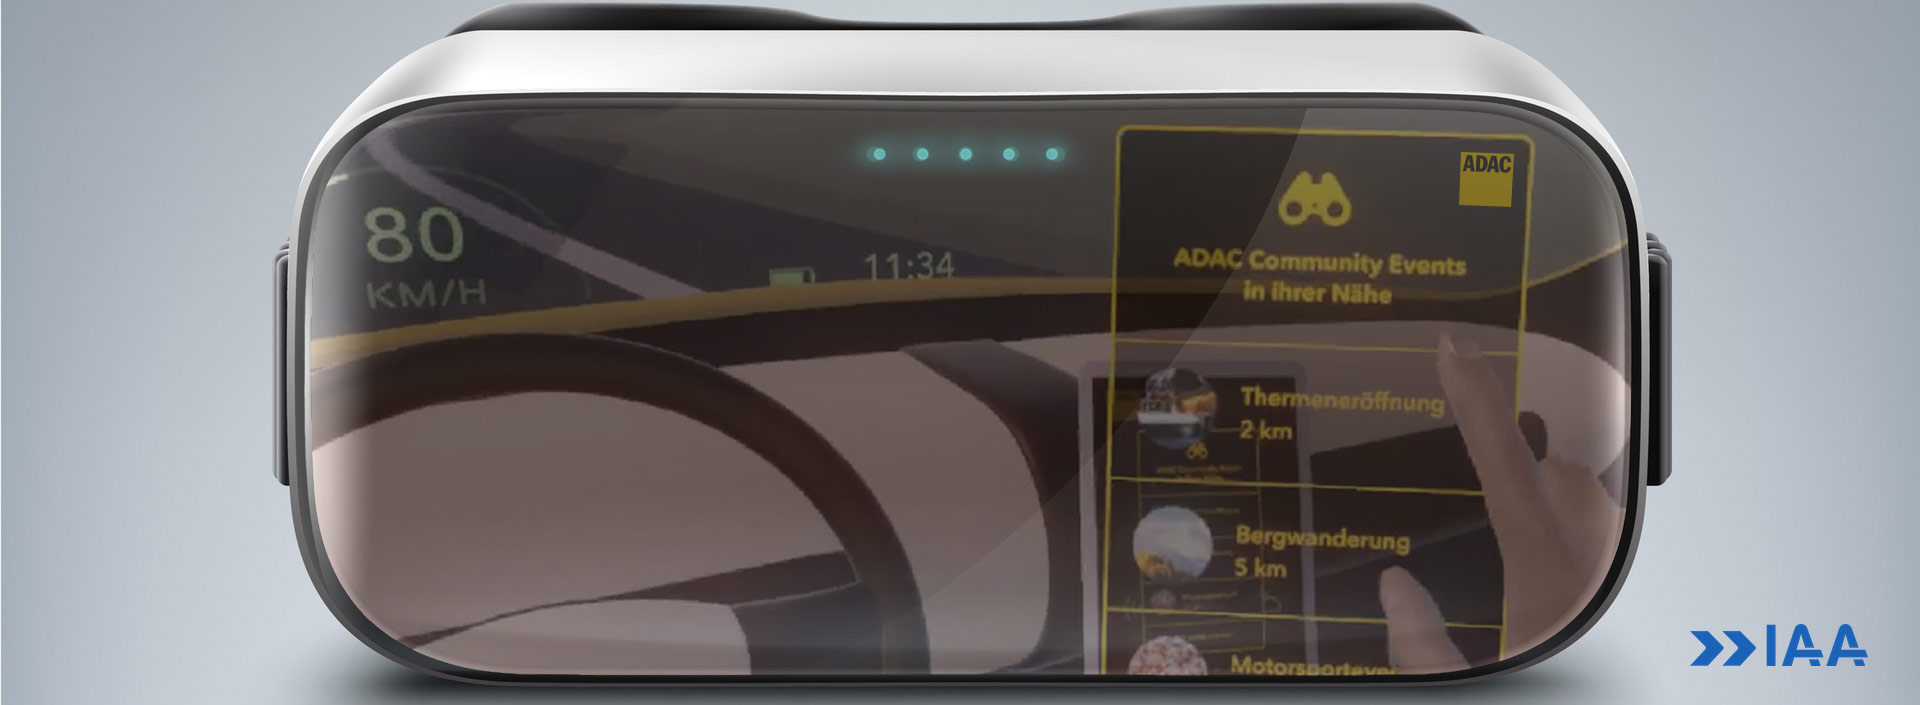 headtrip: Referenzkunde ADAC - ADAC City - Autonomes Fahren